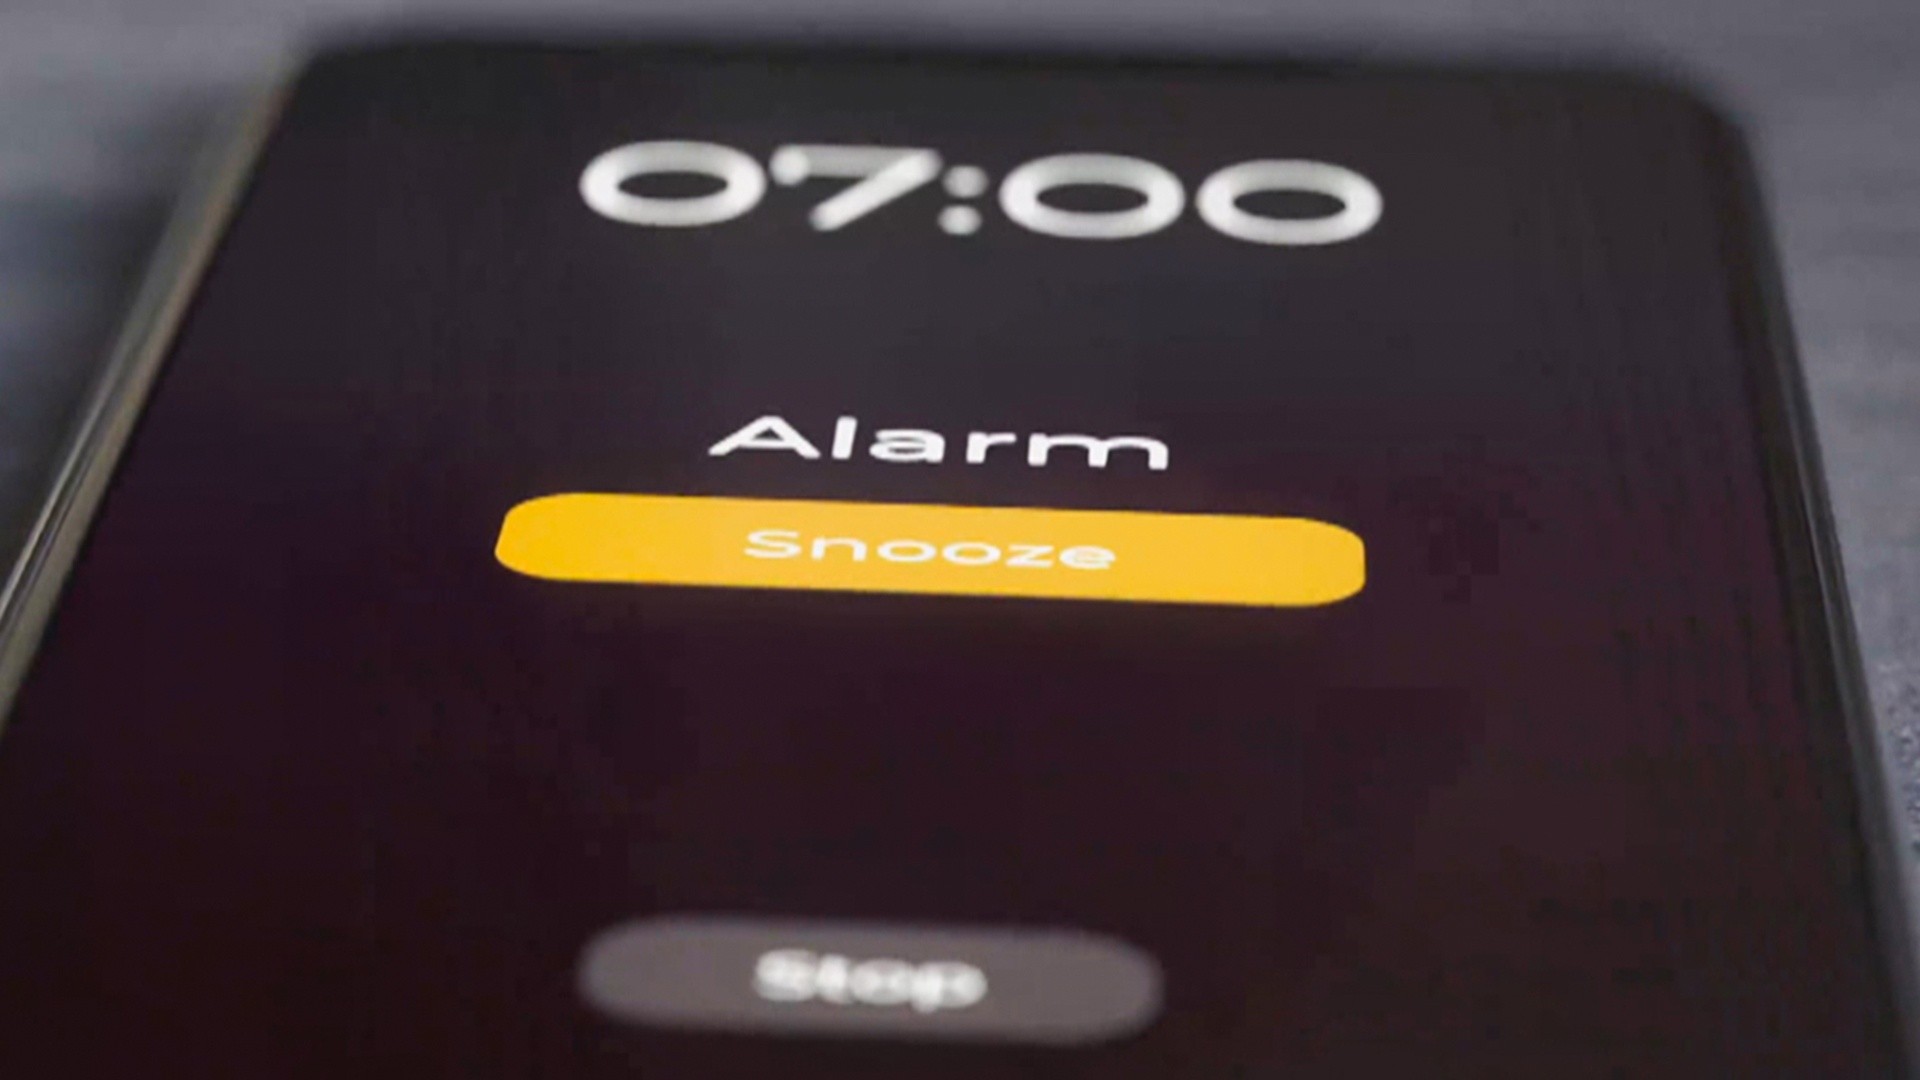 Rude awakening: iPhone users say alarm clock app isn't working